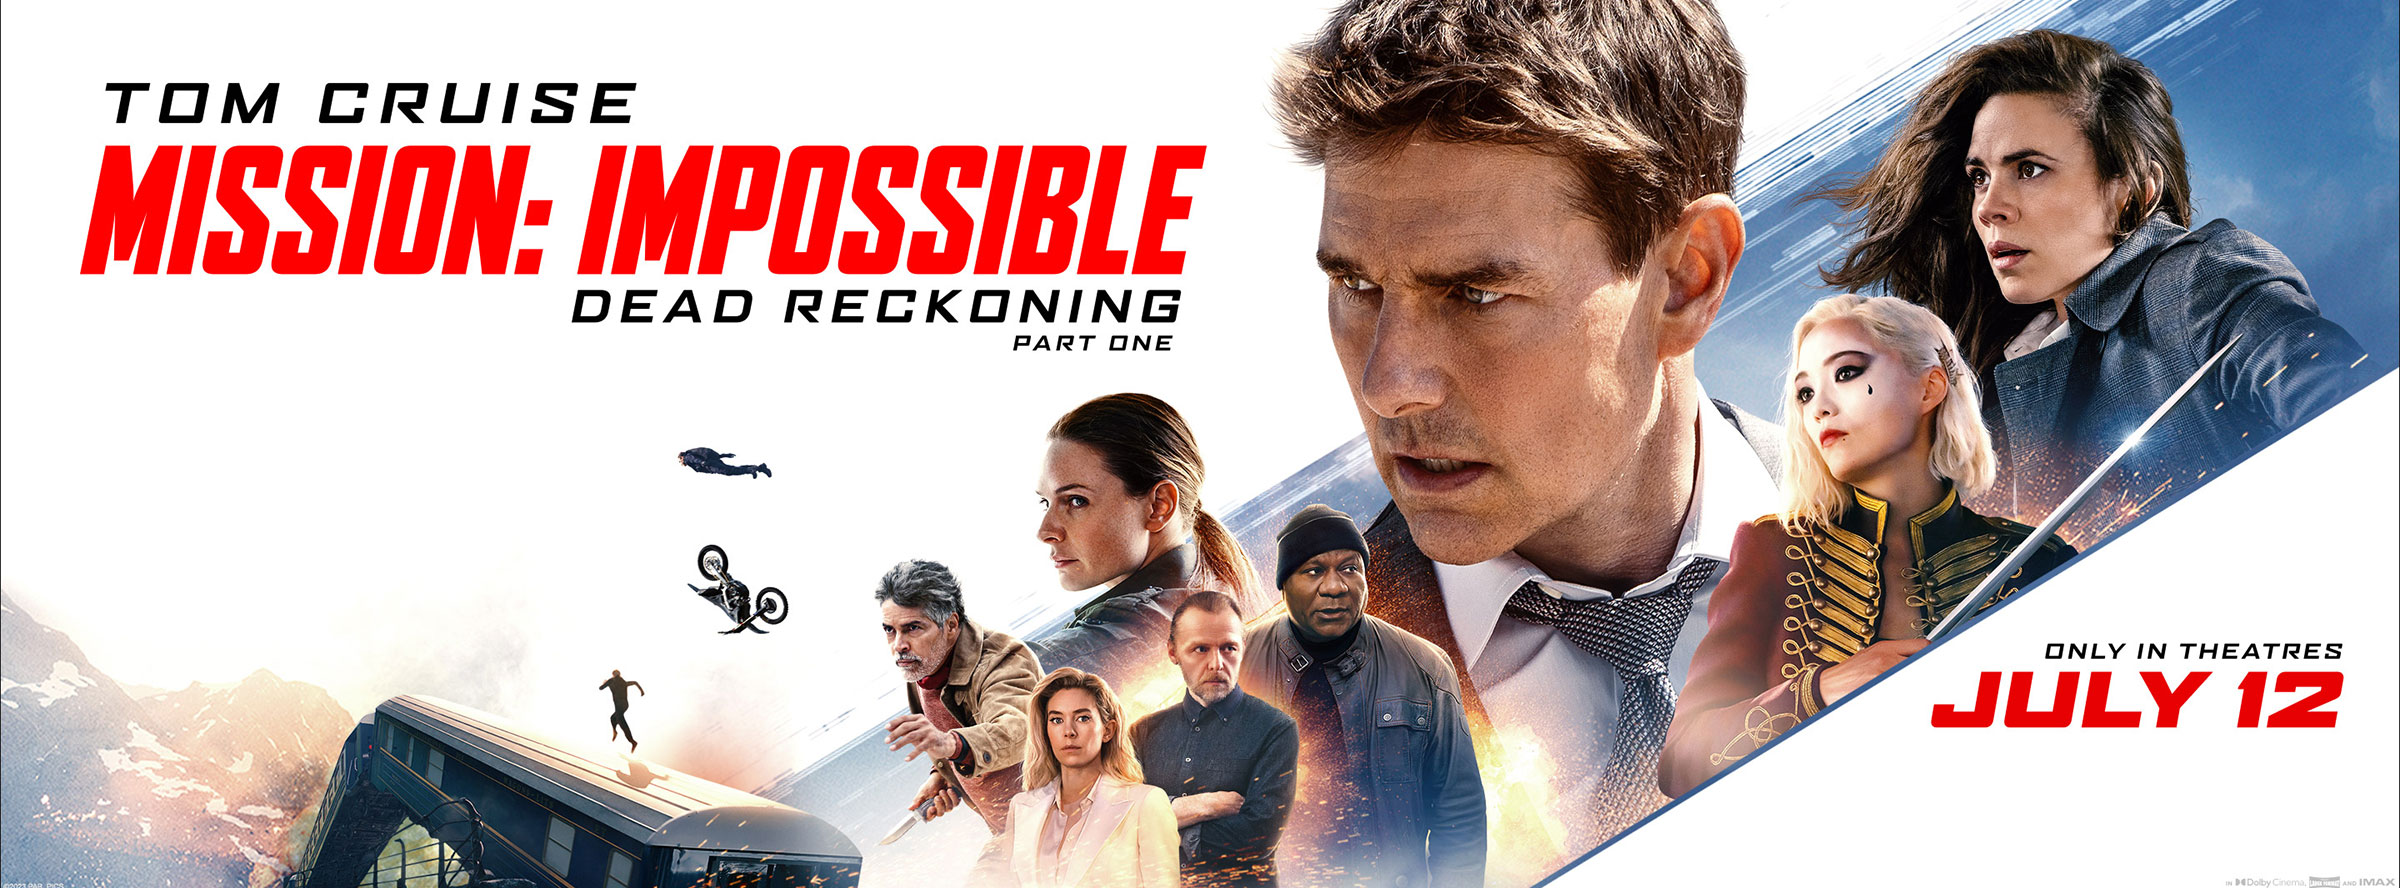 Slider Image for Mission: Impossible - Dead Reckoning Part One